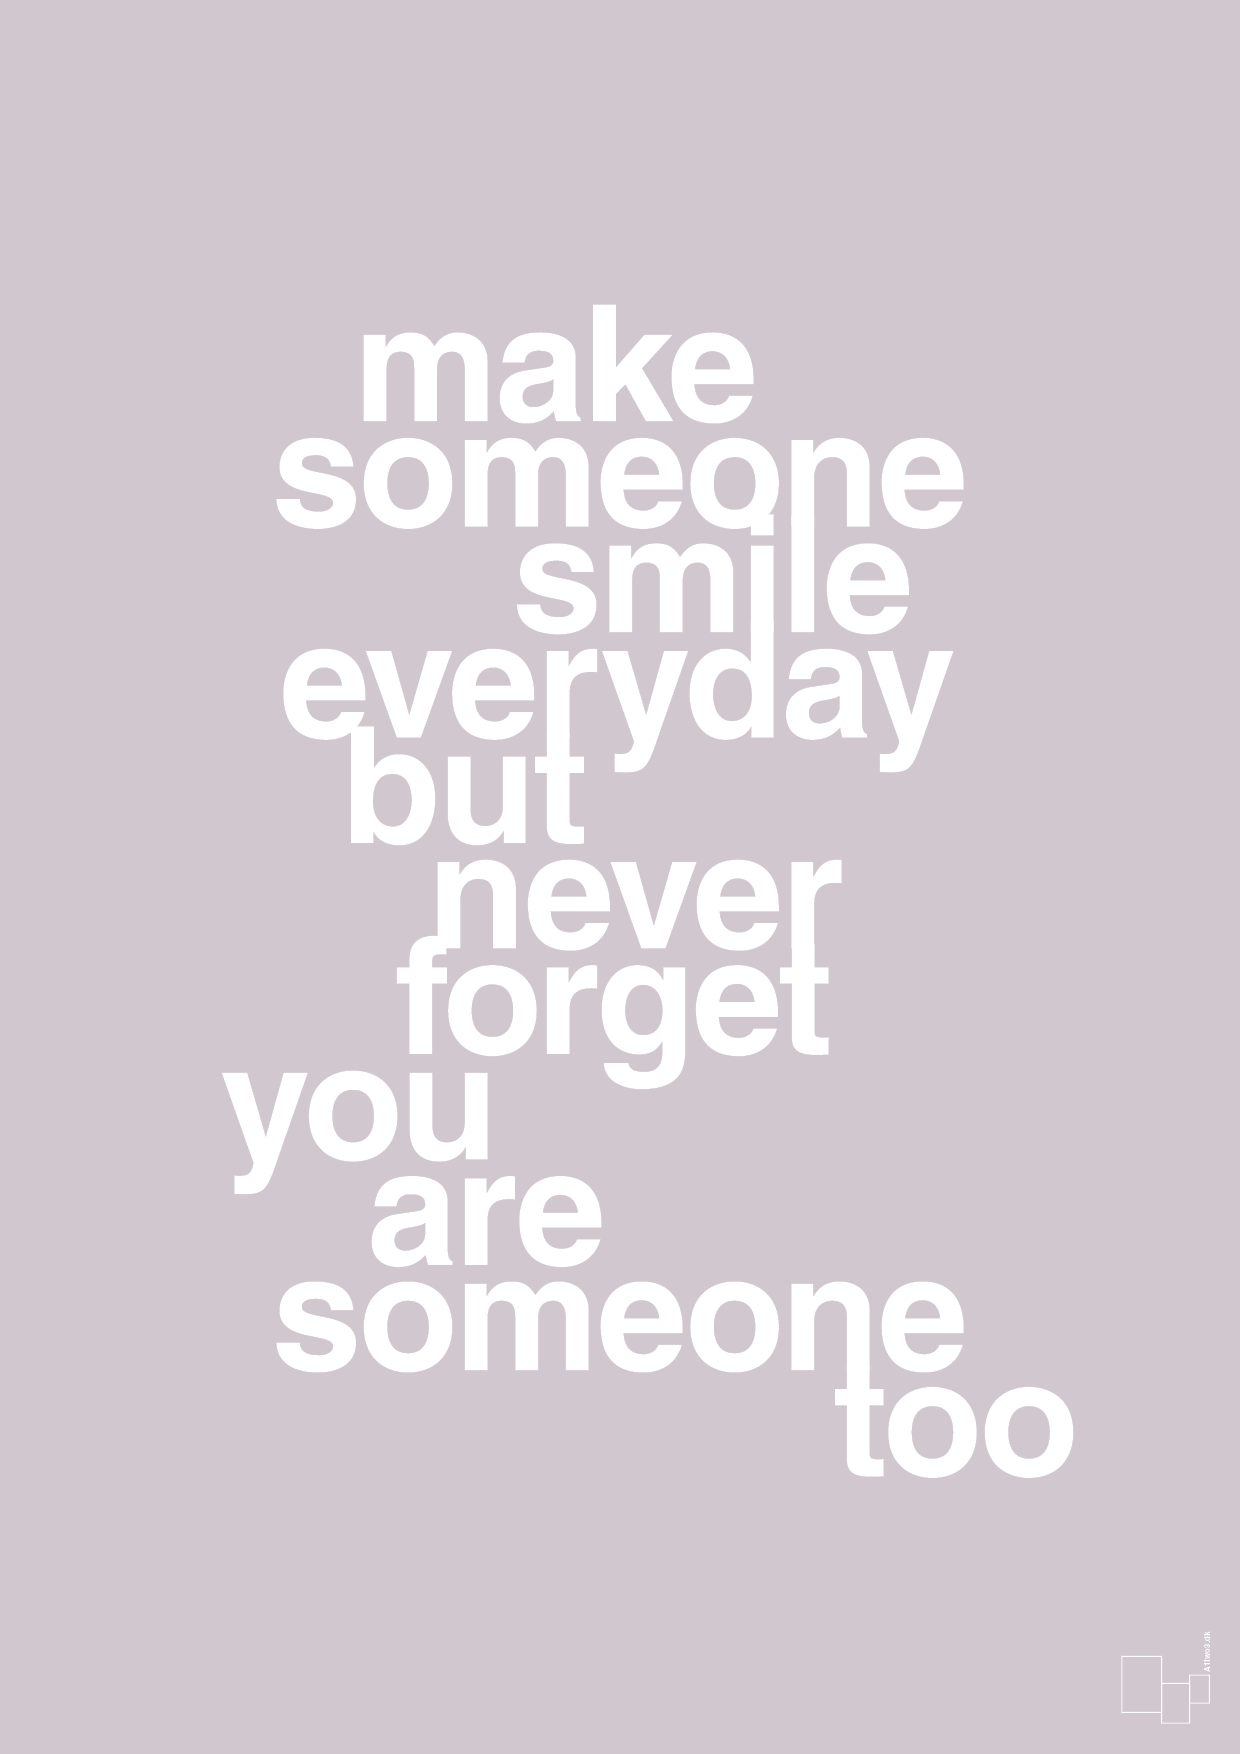 make someone smile everyday - Plakat med Ordsprog i Dusty Lilac